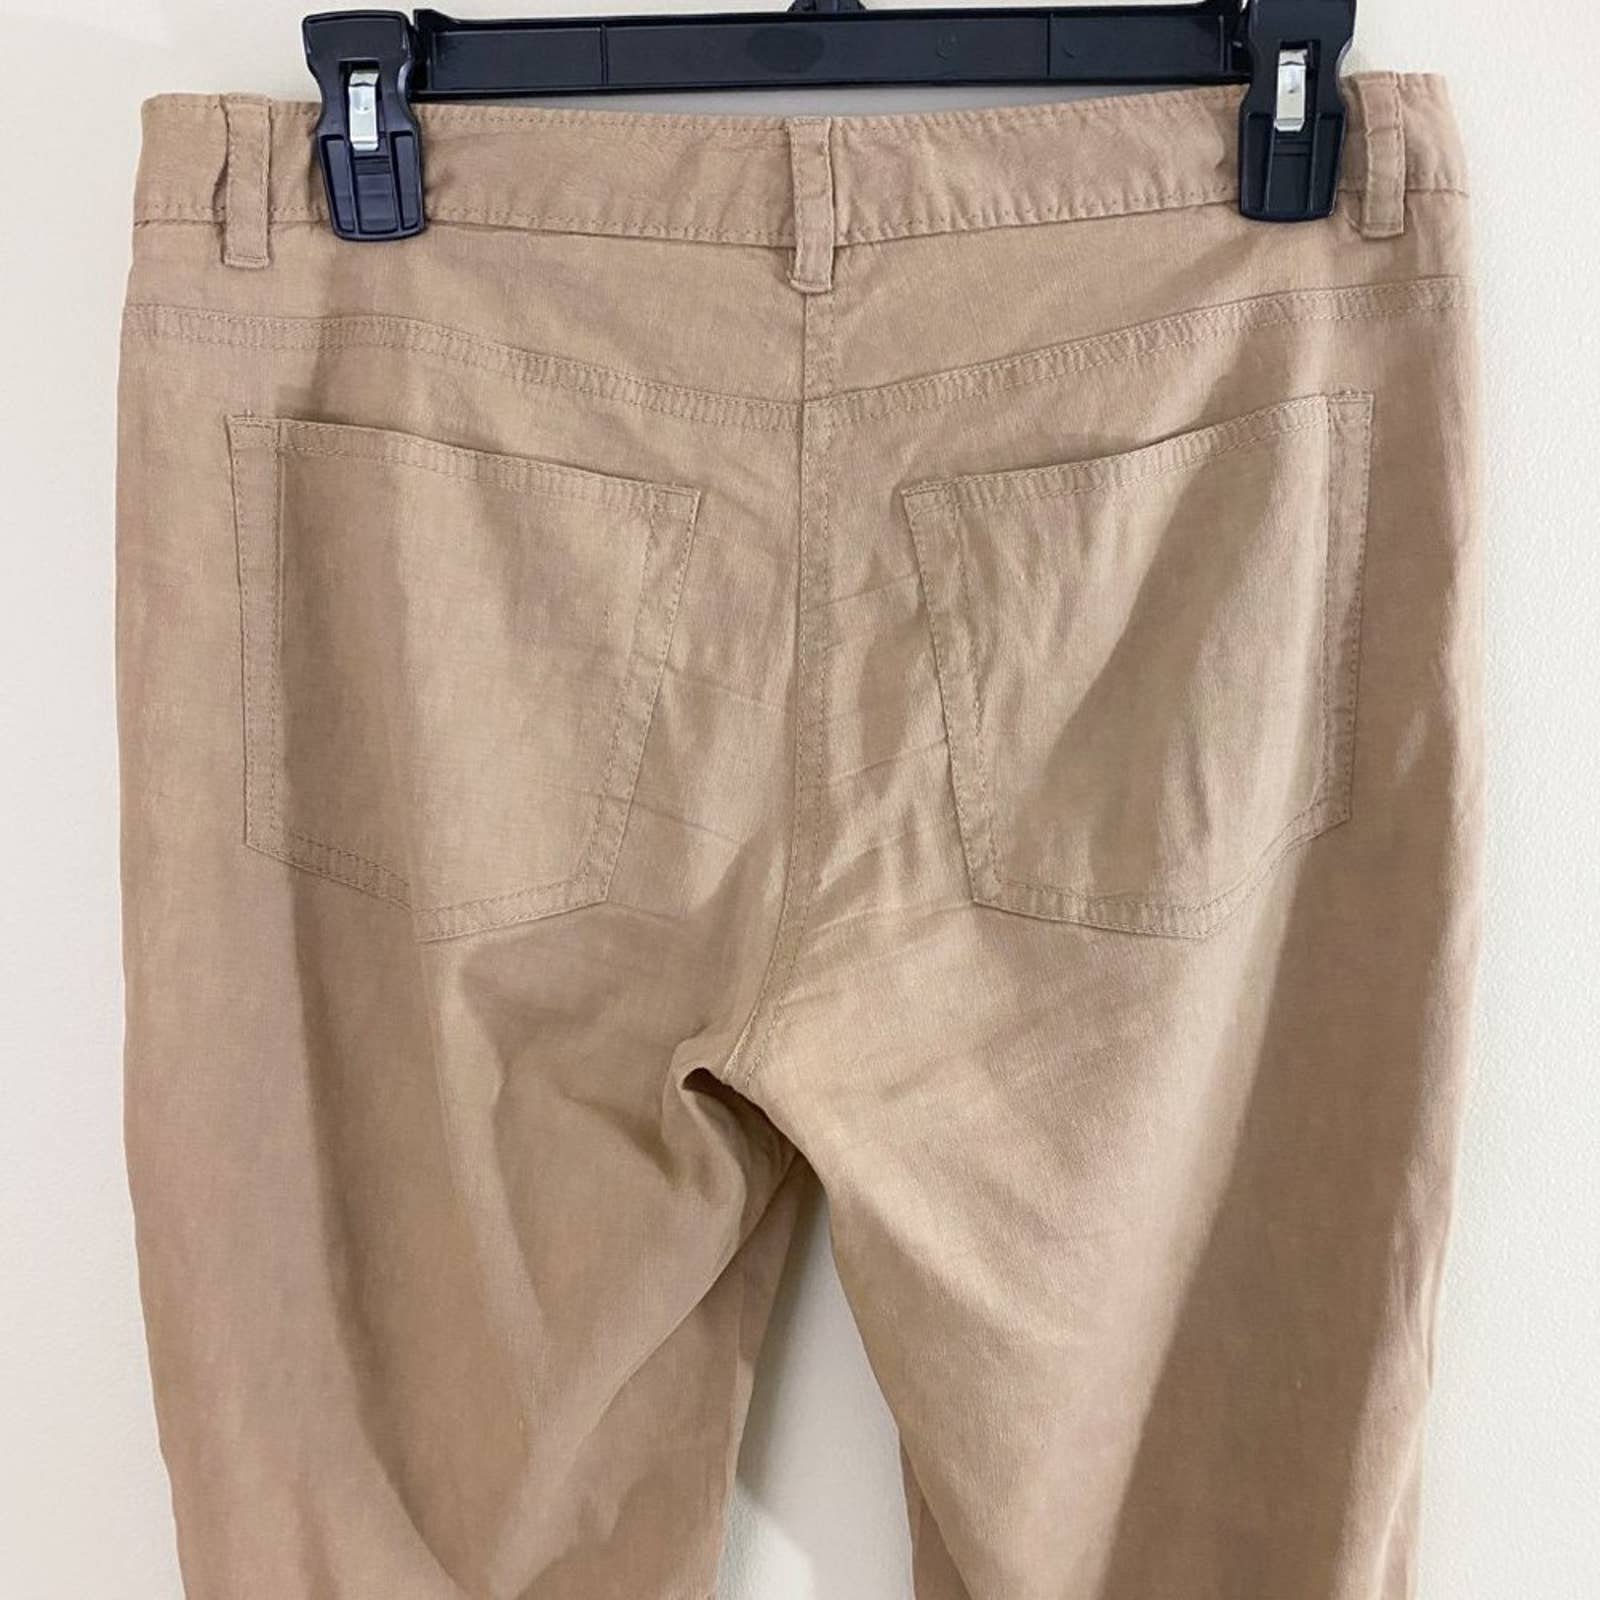 Elegant Theory Khaki Tan Linen Blend Skinny Pants Women´s Size 4 EUC Pockets No Stretch gbjHcpQge Counter Genuine 